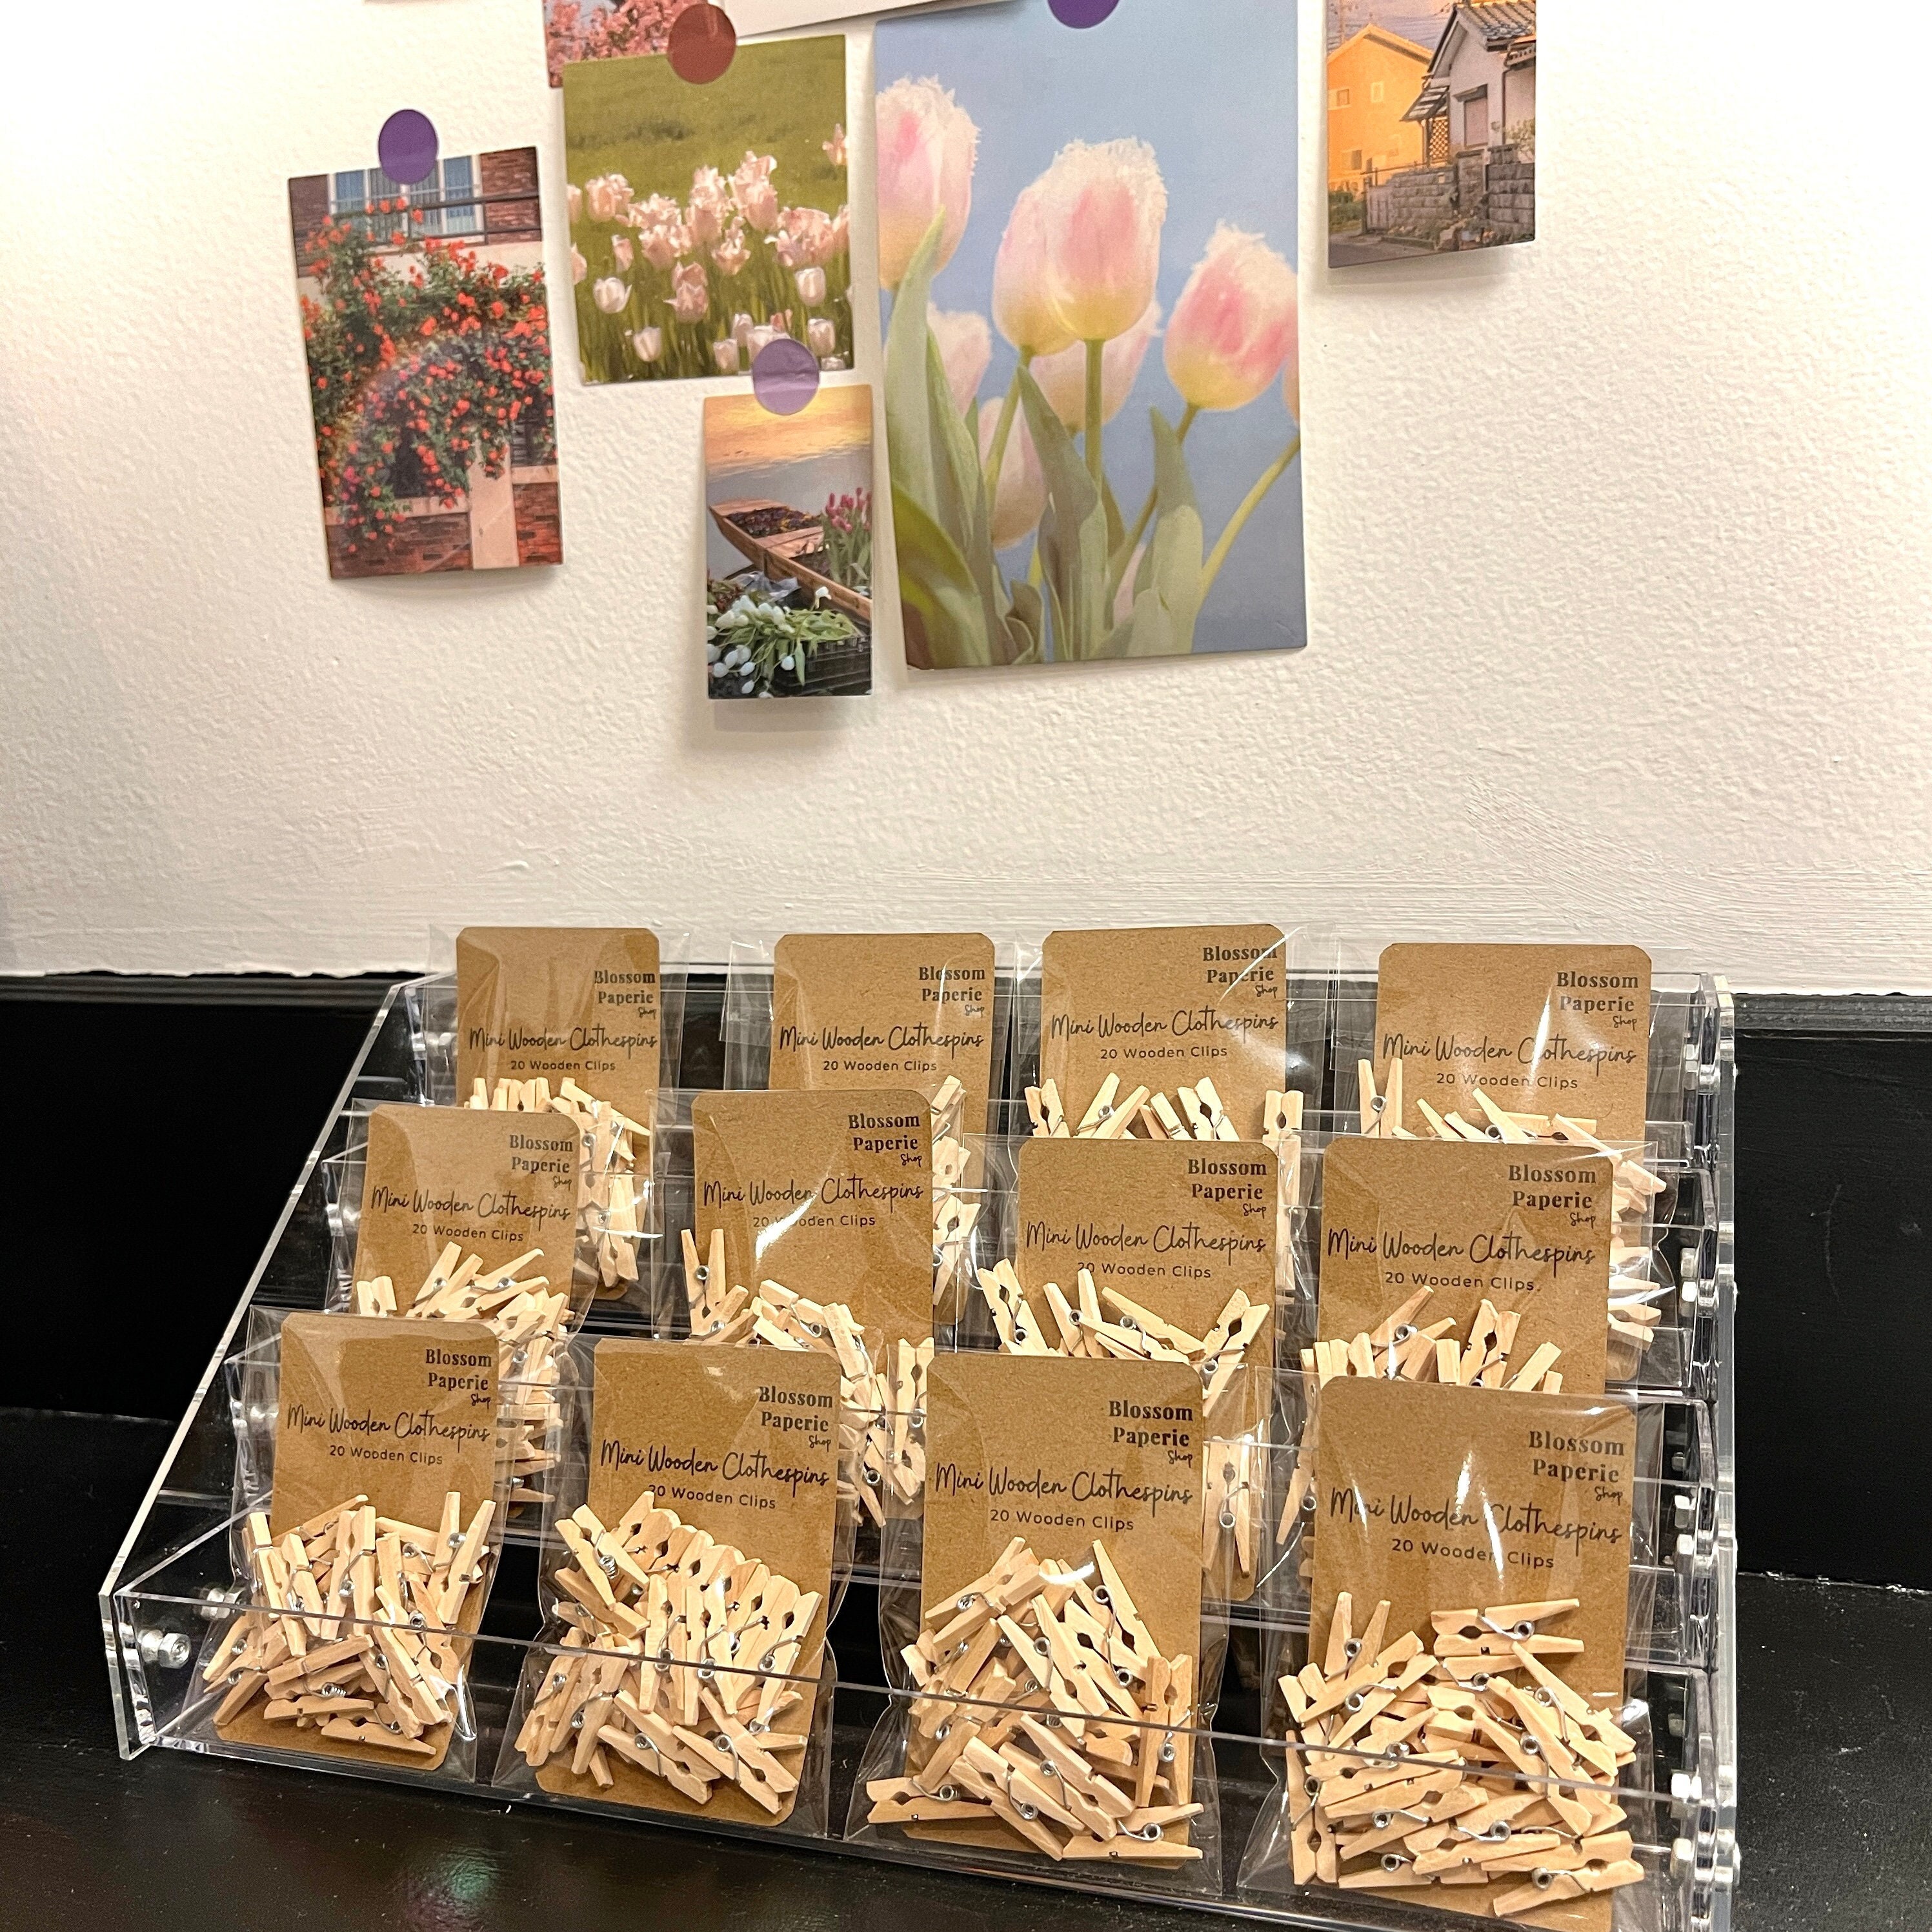 100 Mini Clothespins, Wood Clothespins, Gold, Tiny Clothespins